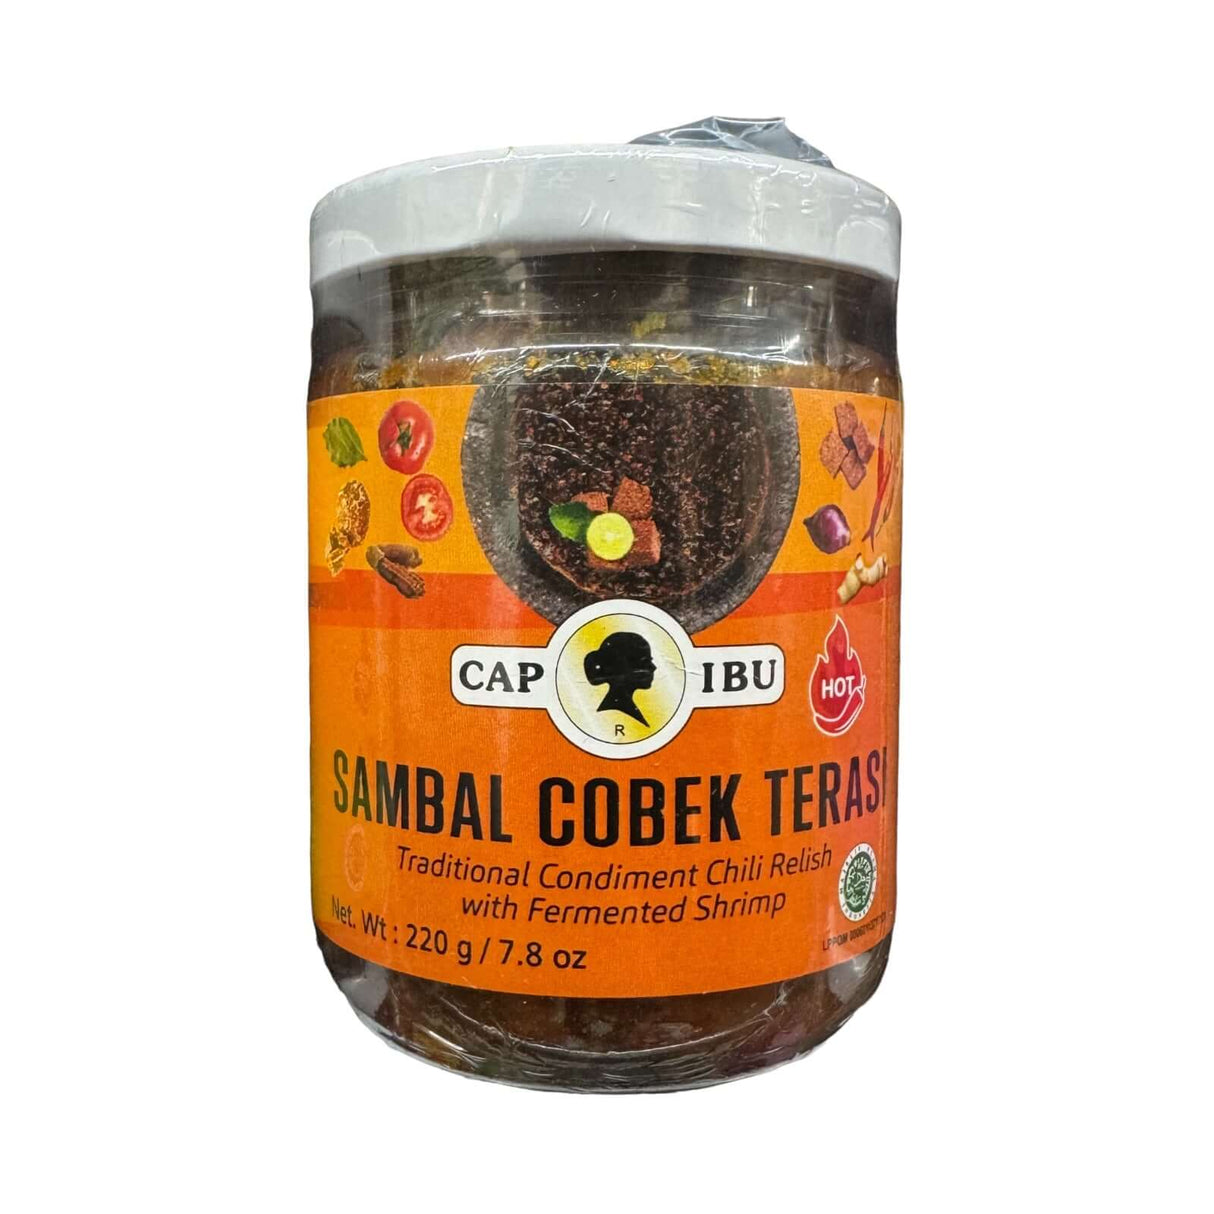 Cap Ibu Sambal Cobek Terasi Traditional Condiment Chili Relish with Fermented Shrimp